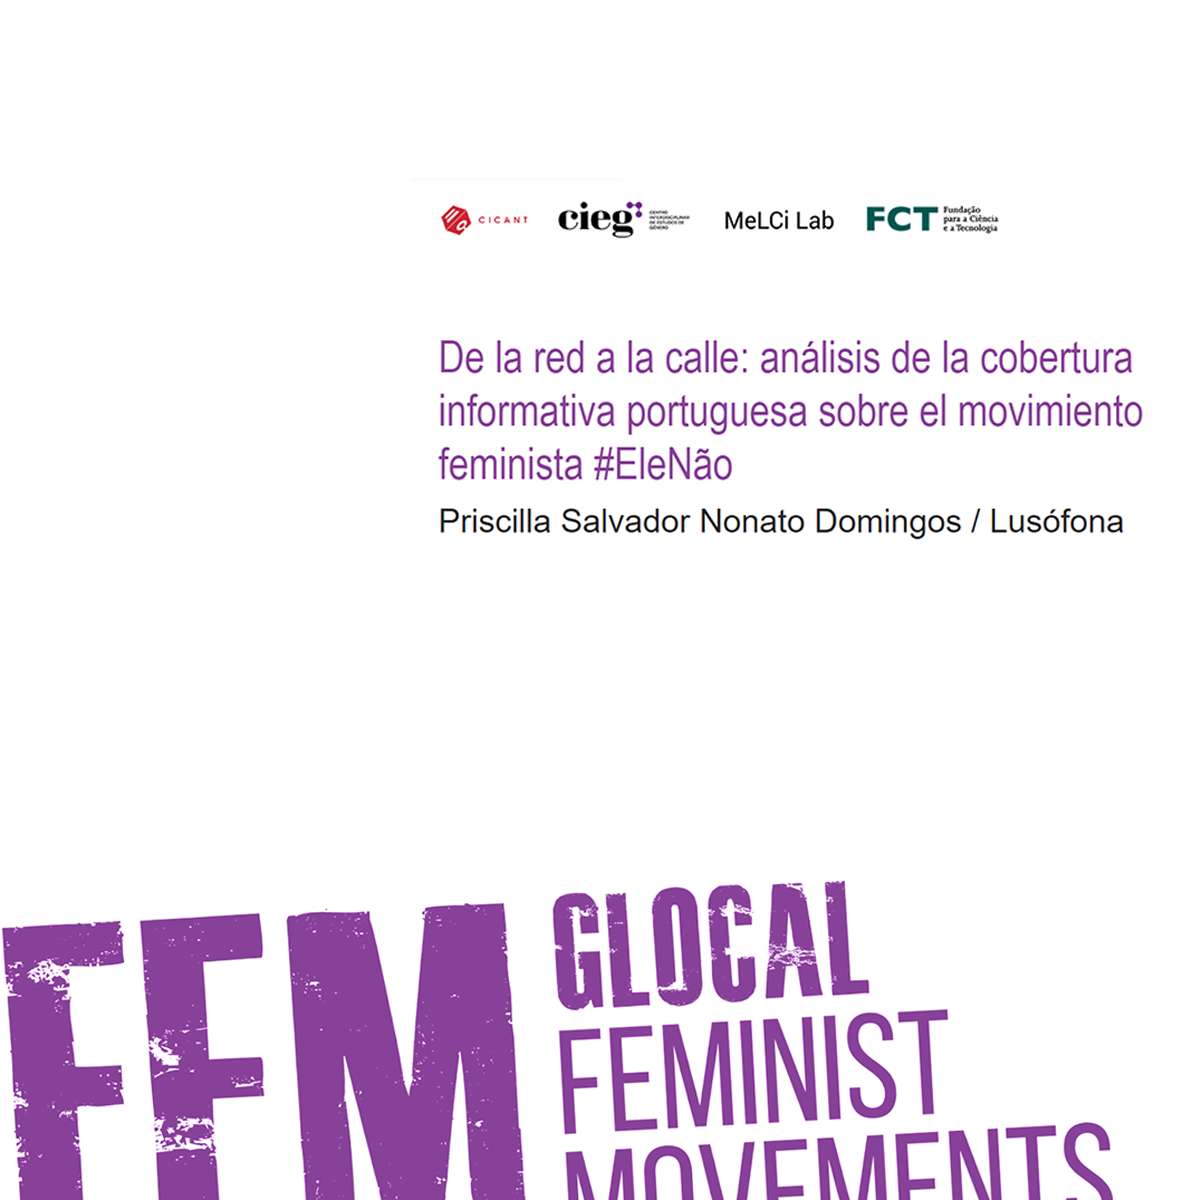 De la red a la calle: Análisis de la cobertura informativa portuguesa sobre el movimiento feminista #EleNão